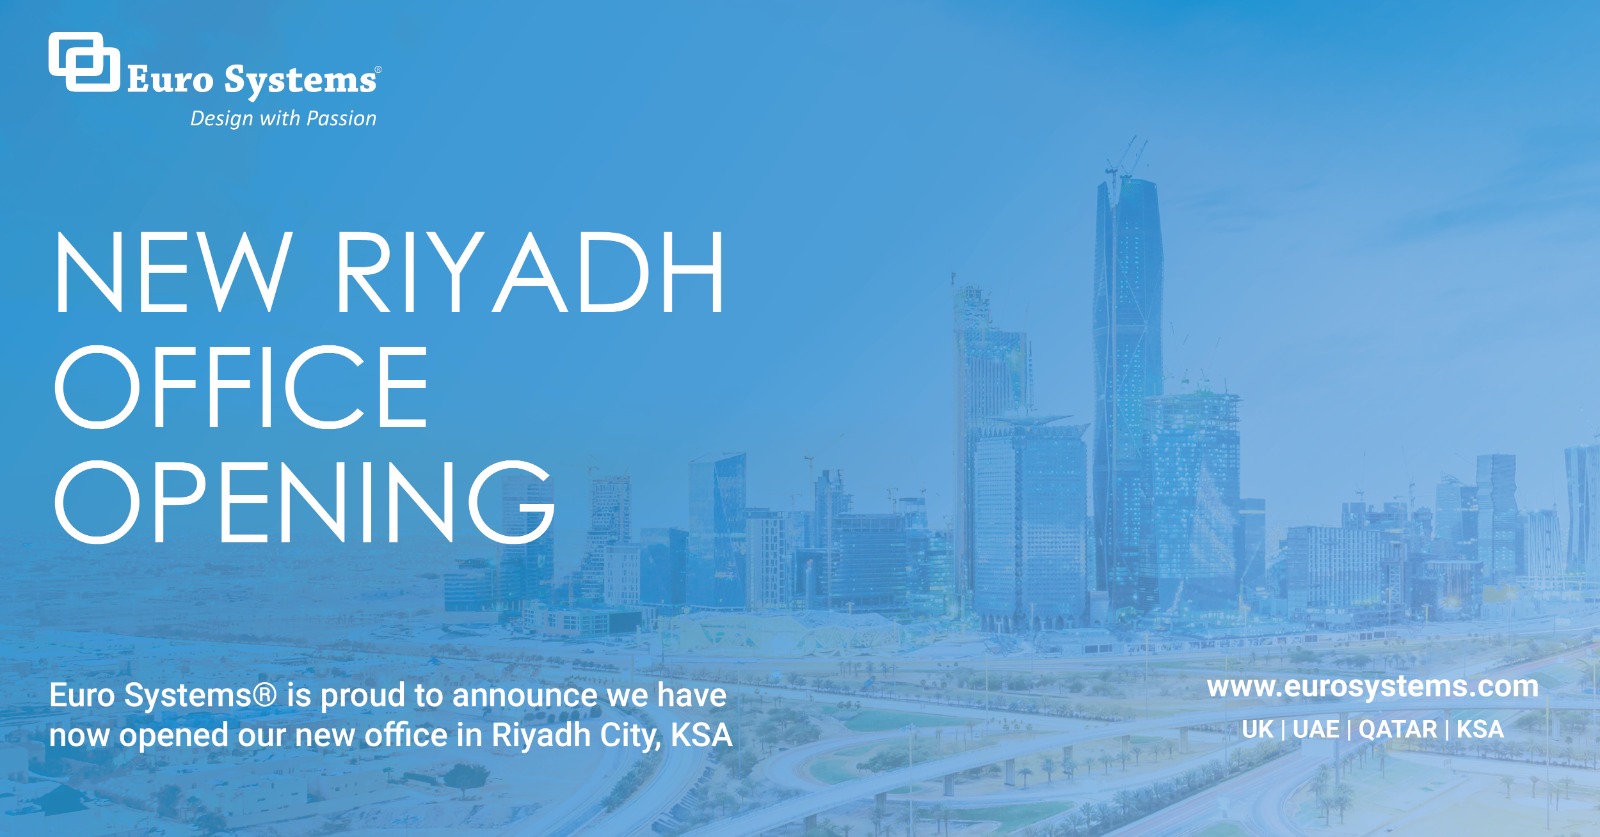 Euro Systems® Riyadh,KSA new office 